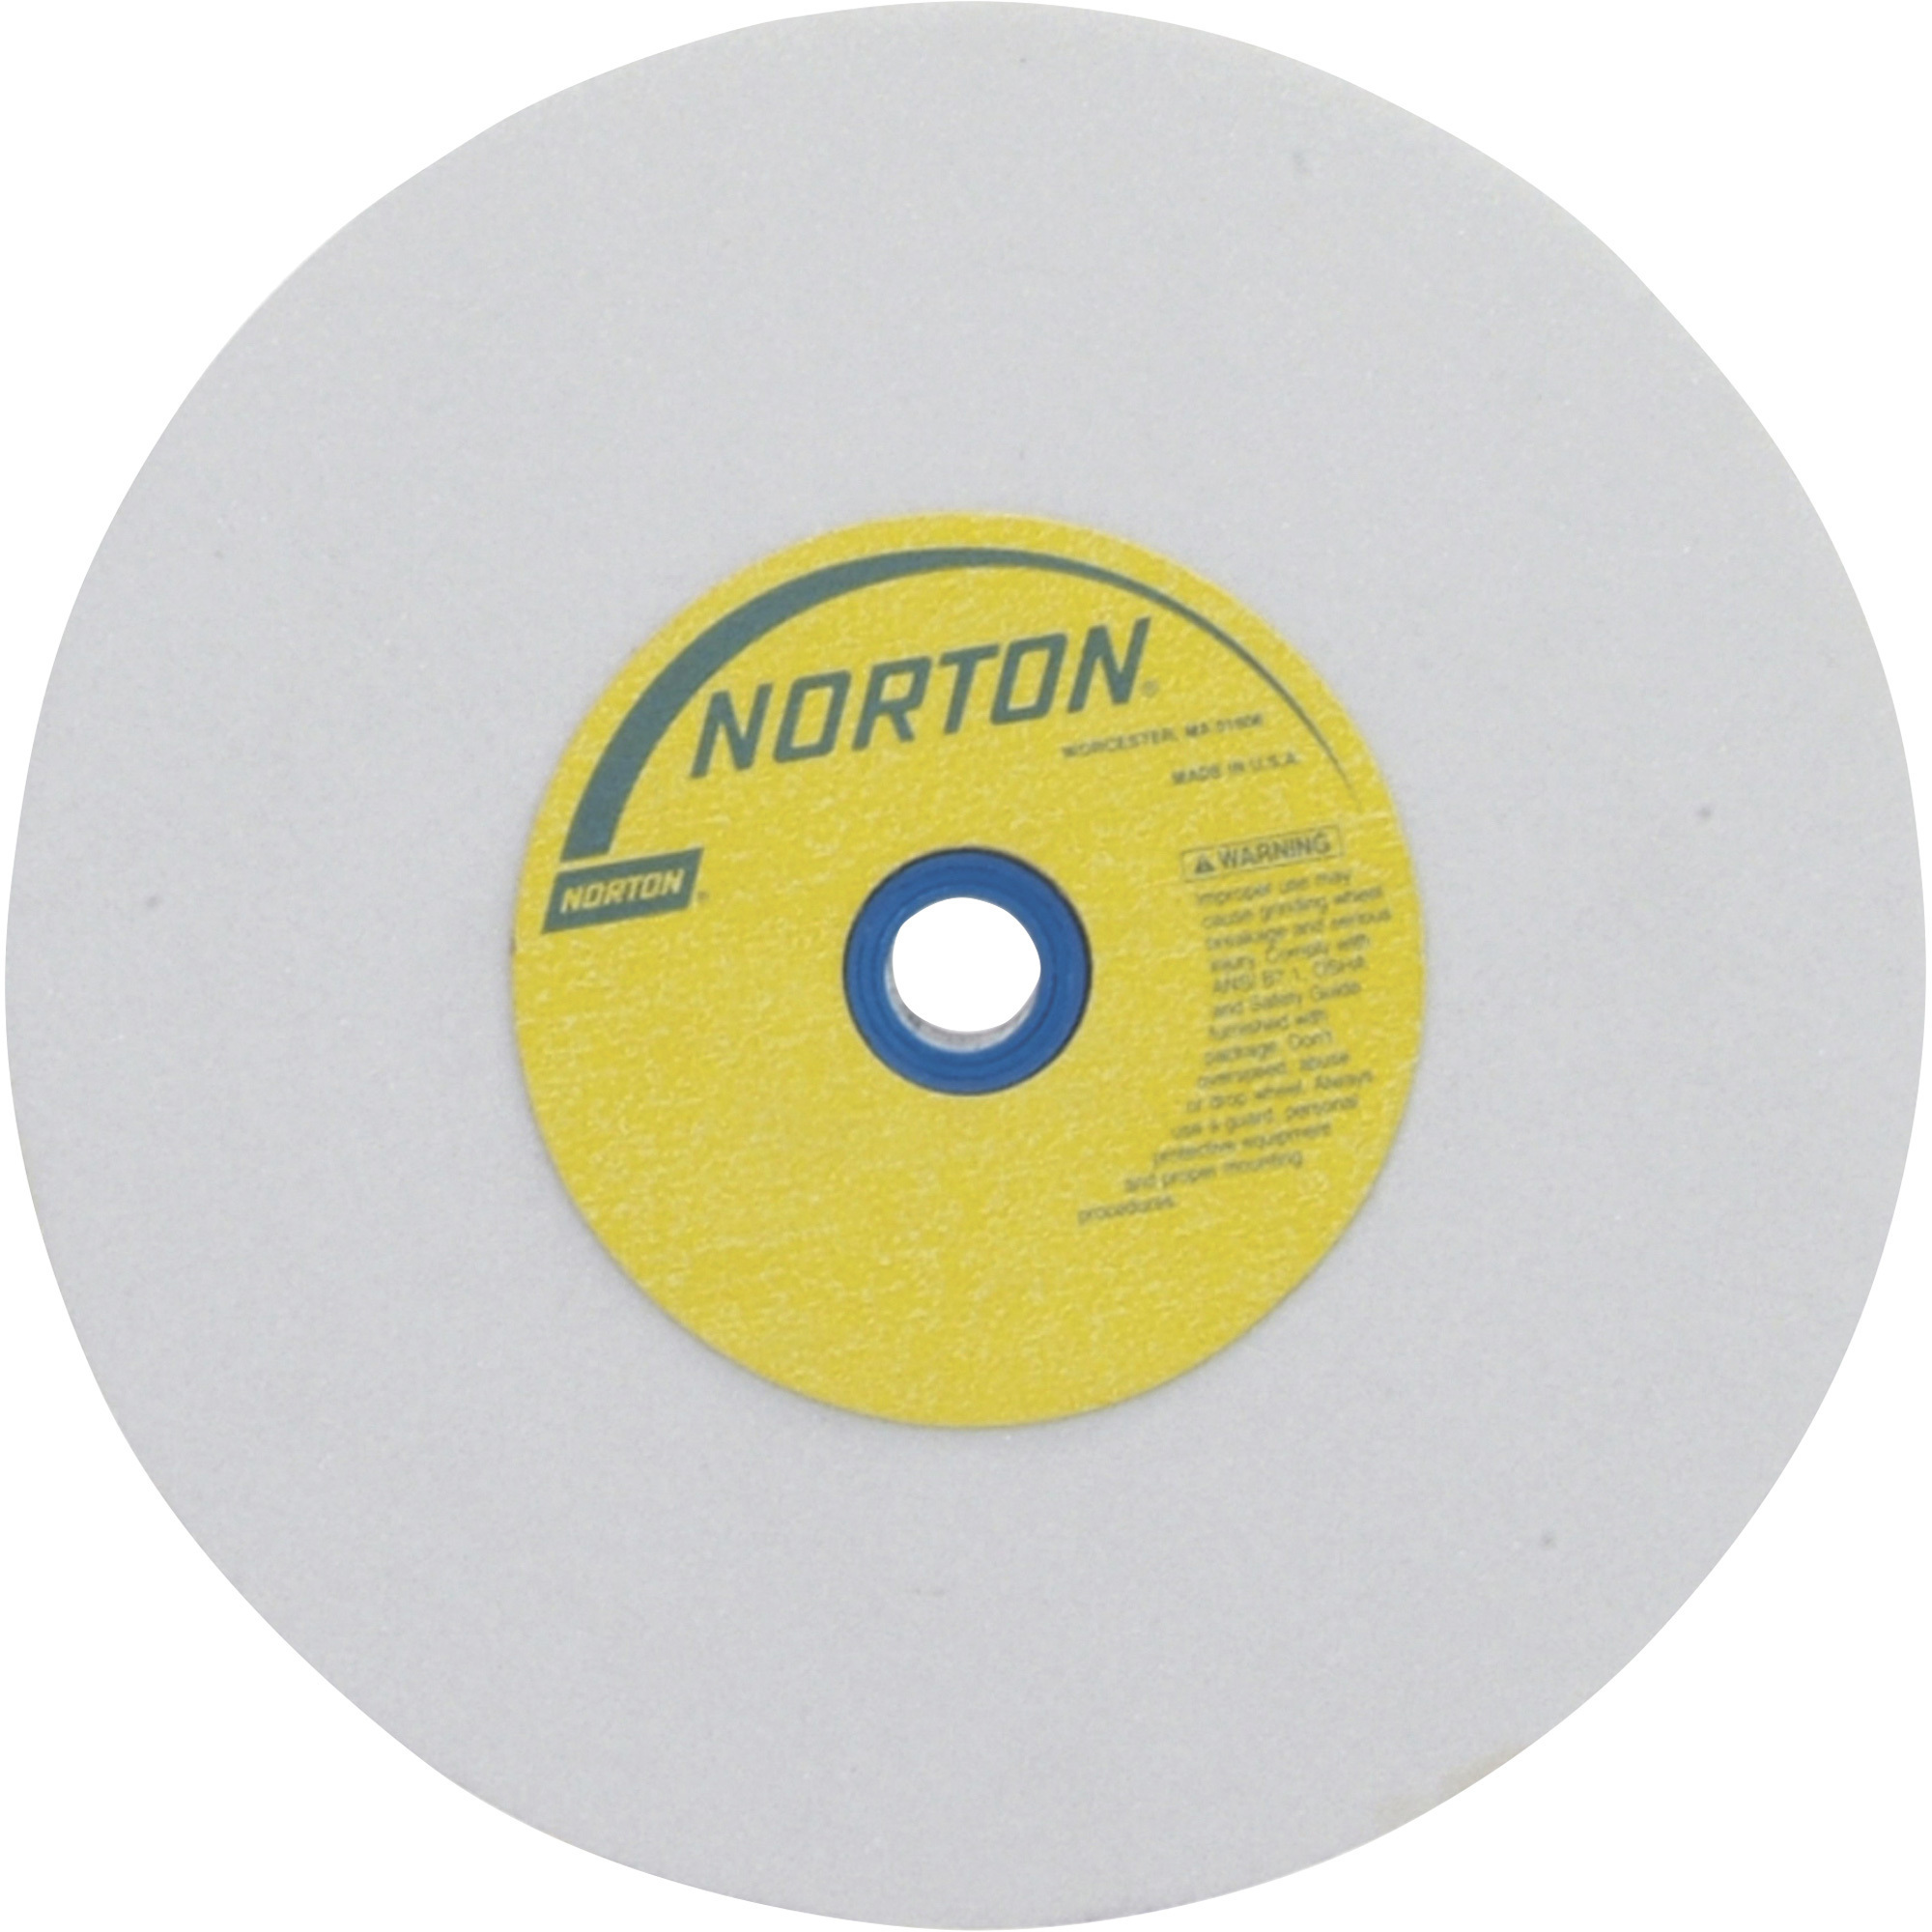 Norton Grinding Wheel, 8Inch x 1Inch, White Aluminum Oxide, 100 Grit